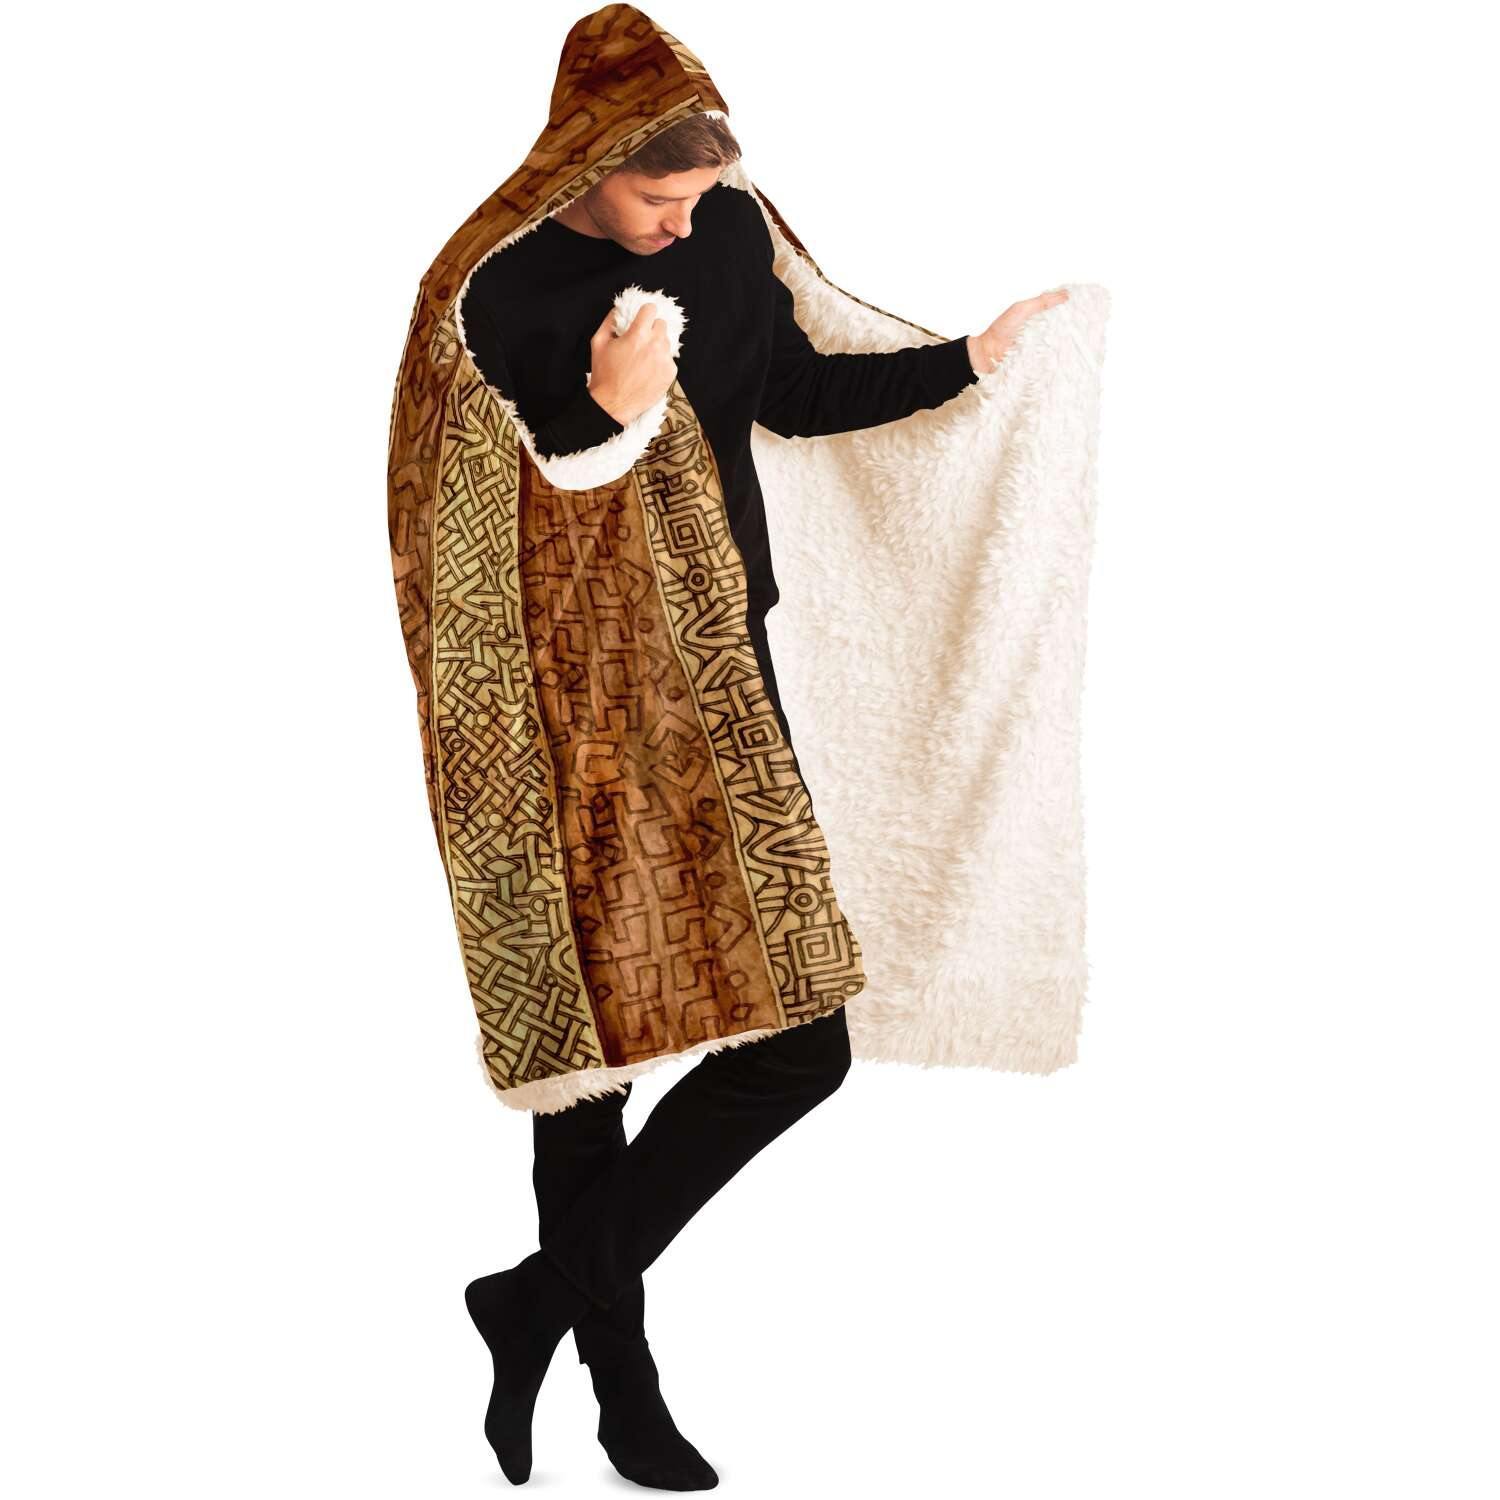 Hooded Blanket - AOP Hooded Blanket, Mali Mudcloth African Inspired